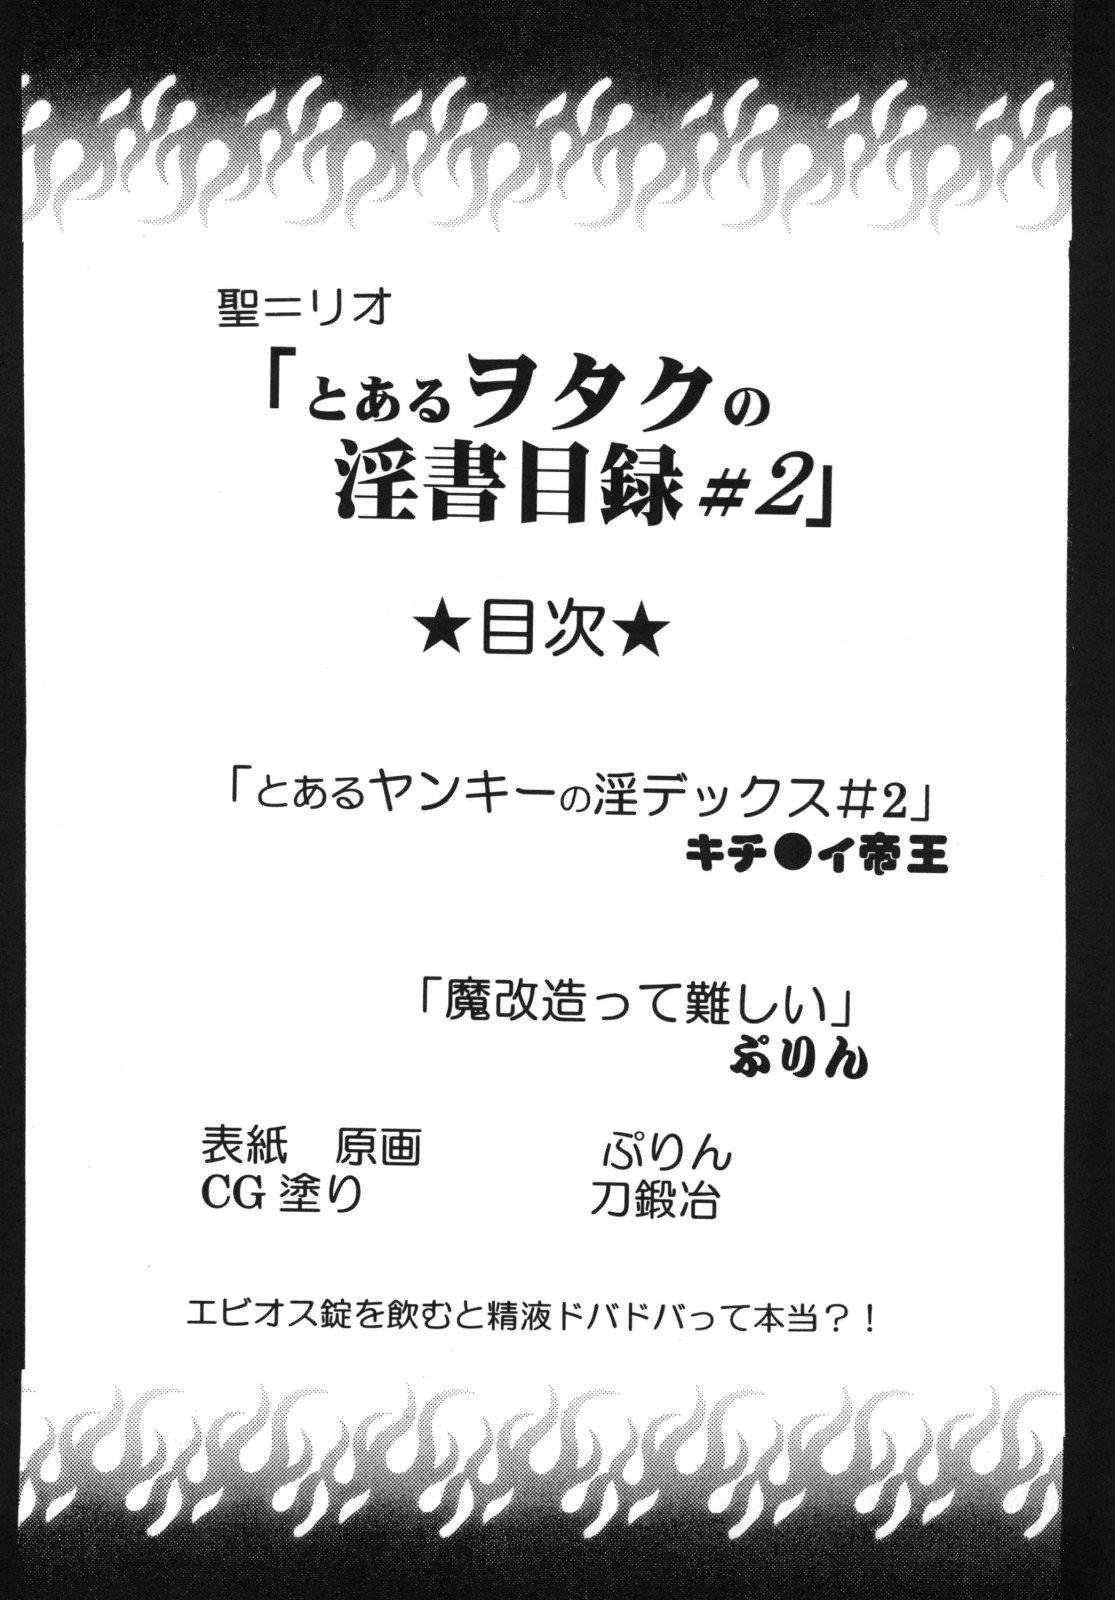 Dirty Talk Toaru Otaku no Index #2 - Toaru majutsu no index Ohmibod - Page 4